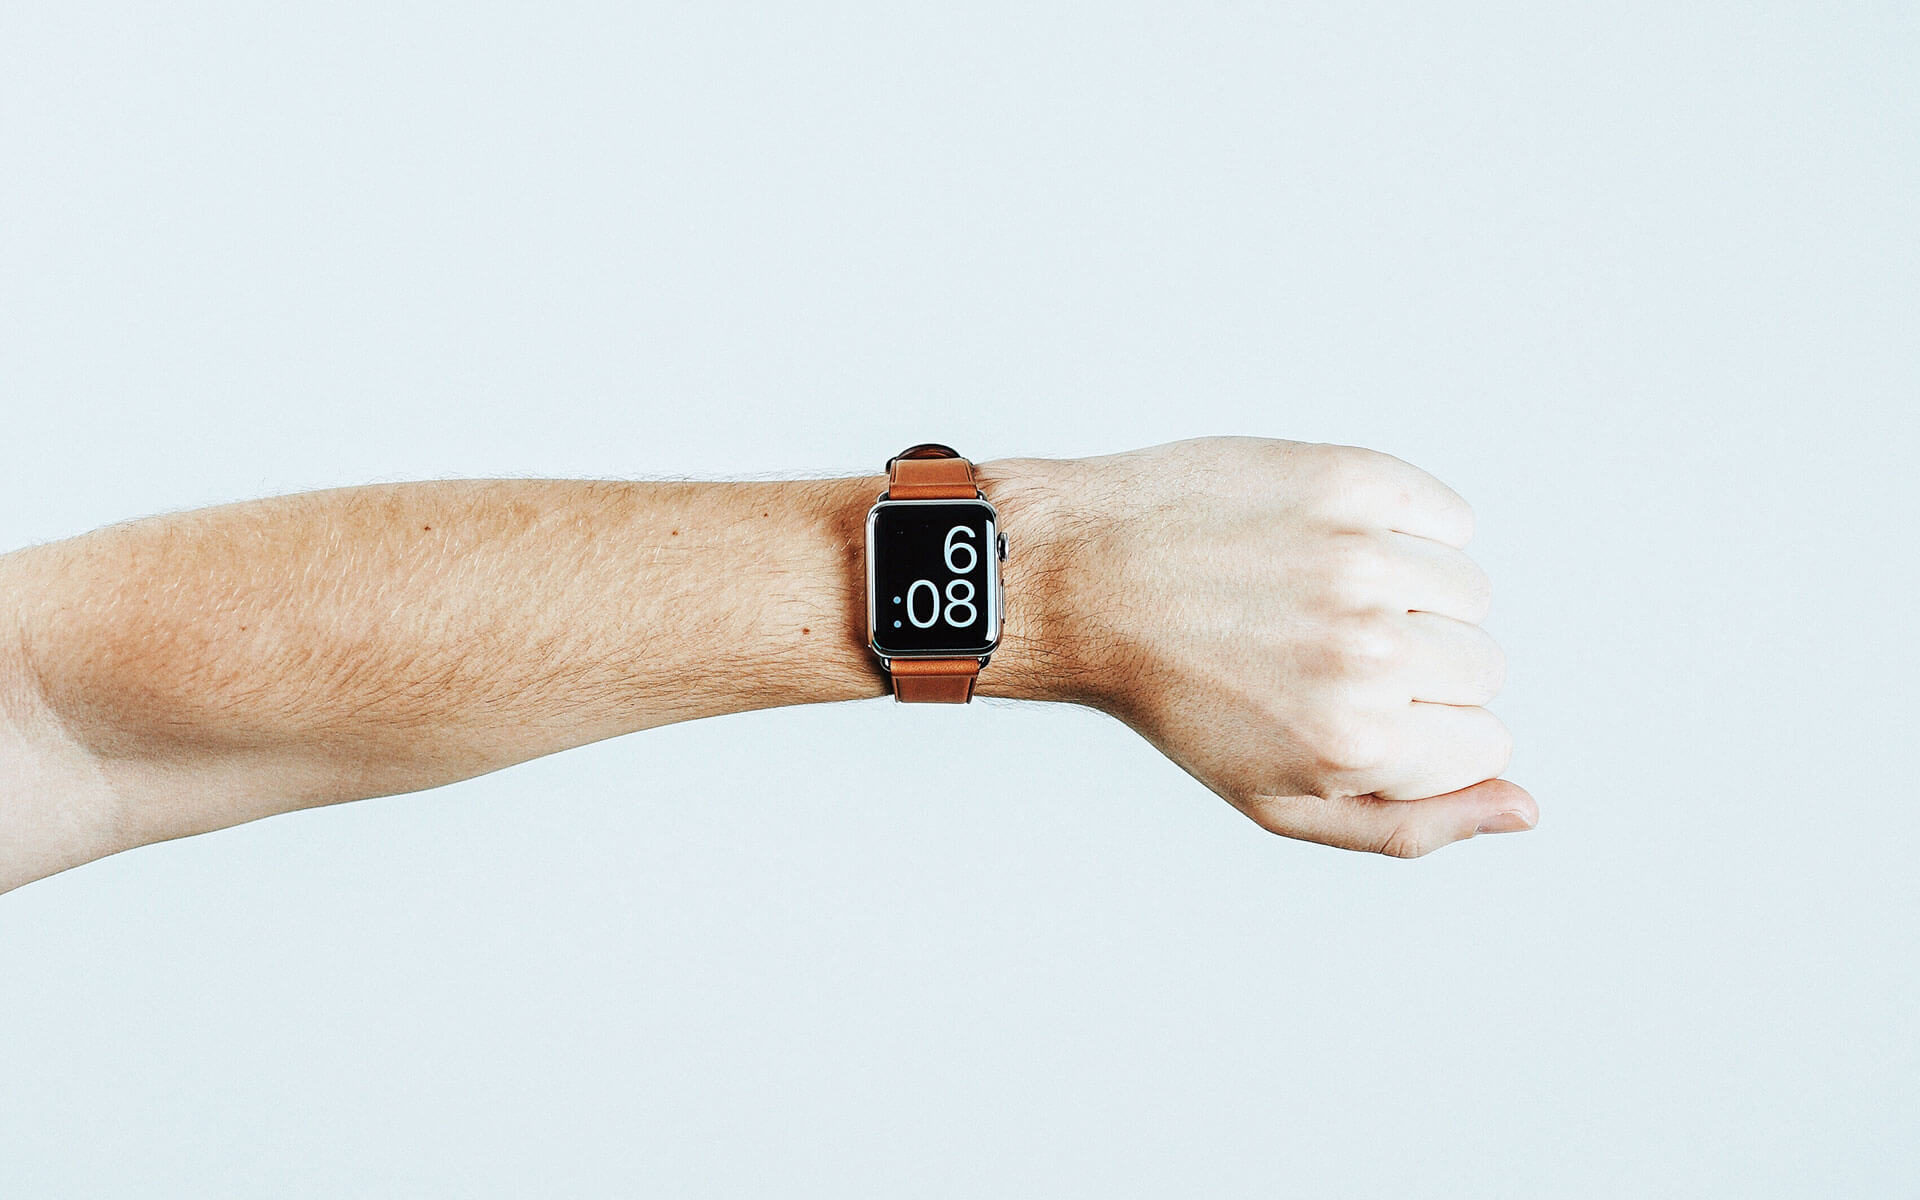 a digital watch on someone's wrist